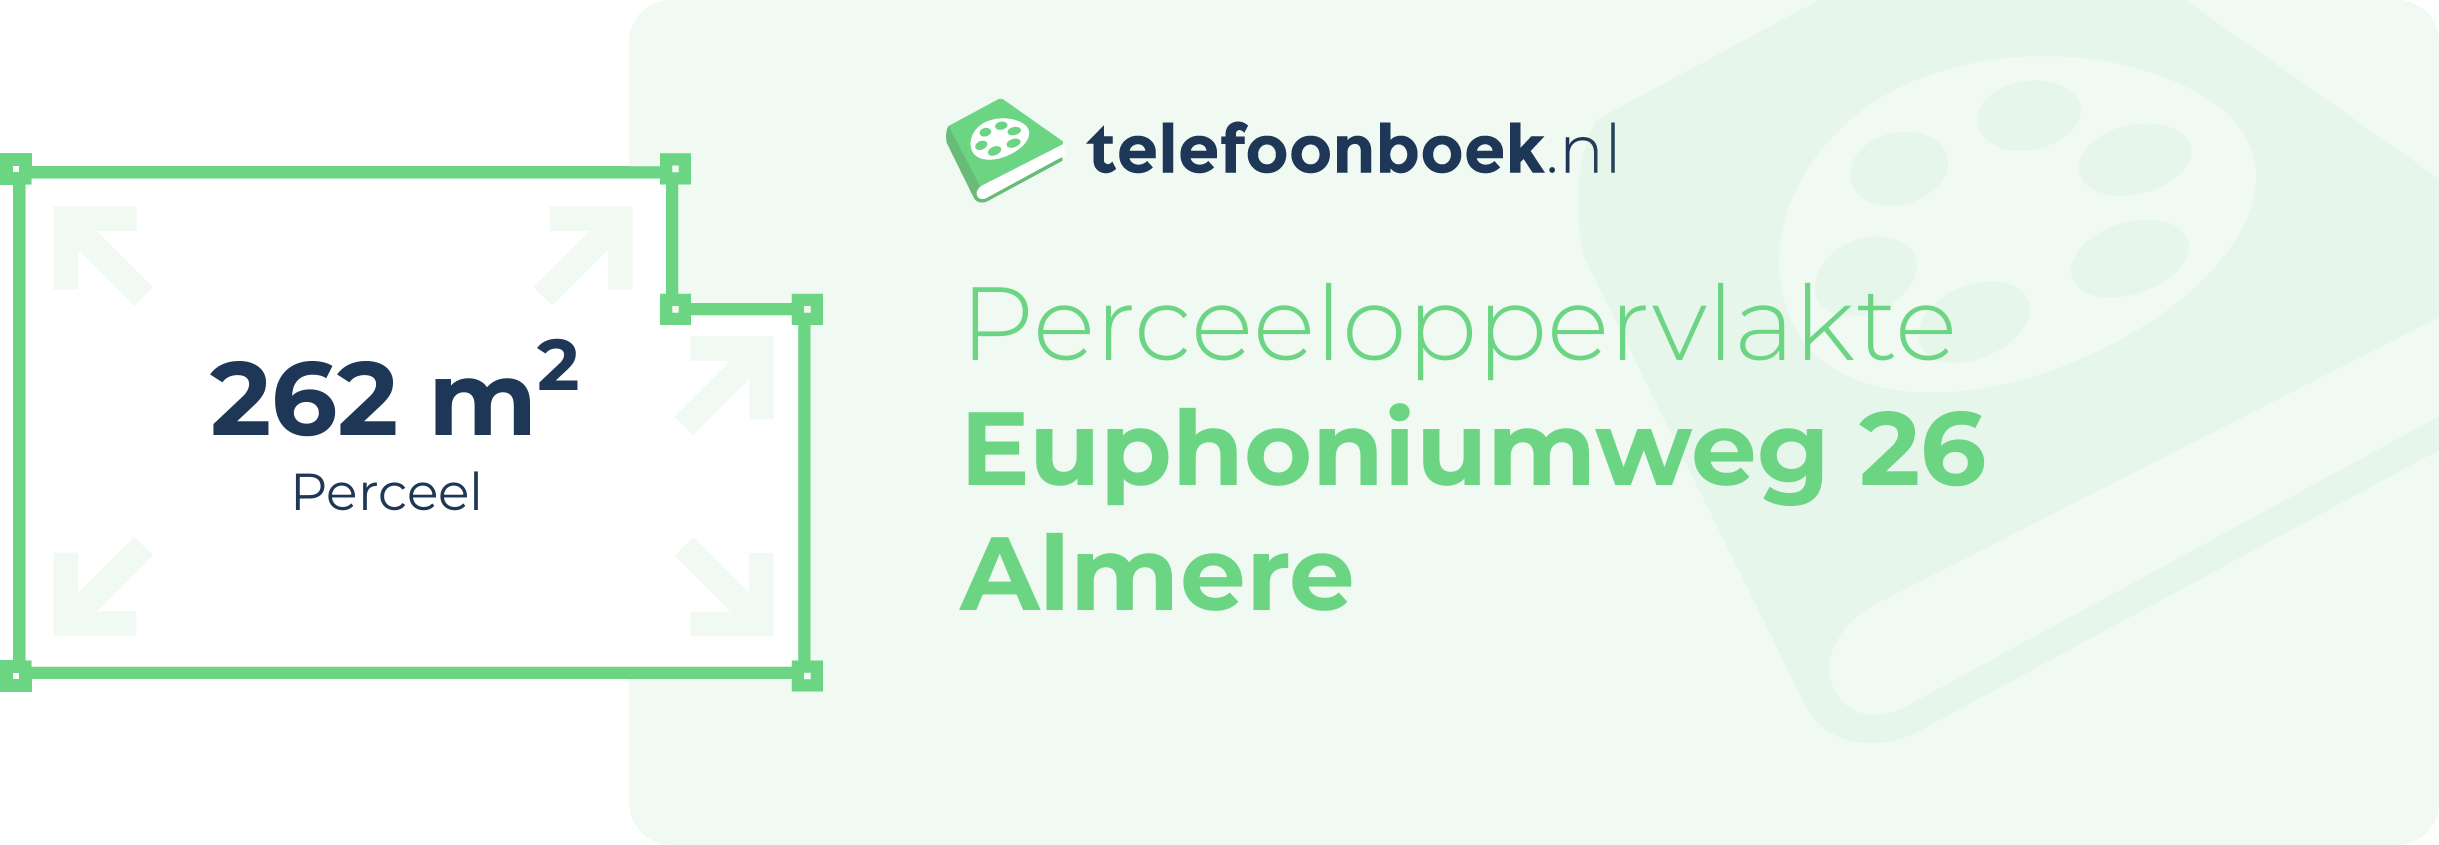 Perceeloppervlakte Euphoniumweg 26 Almere